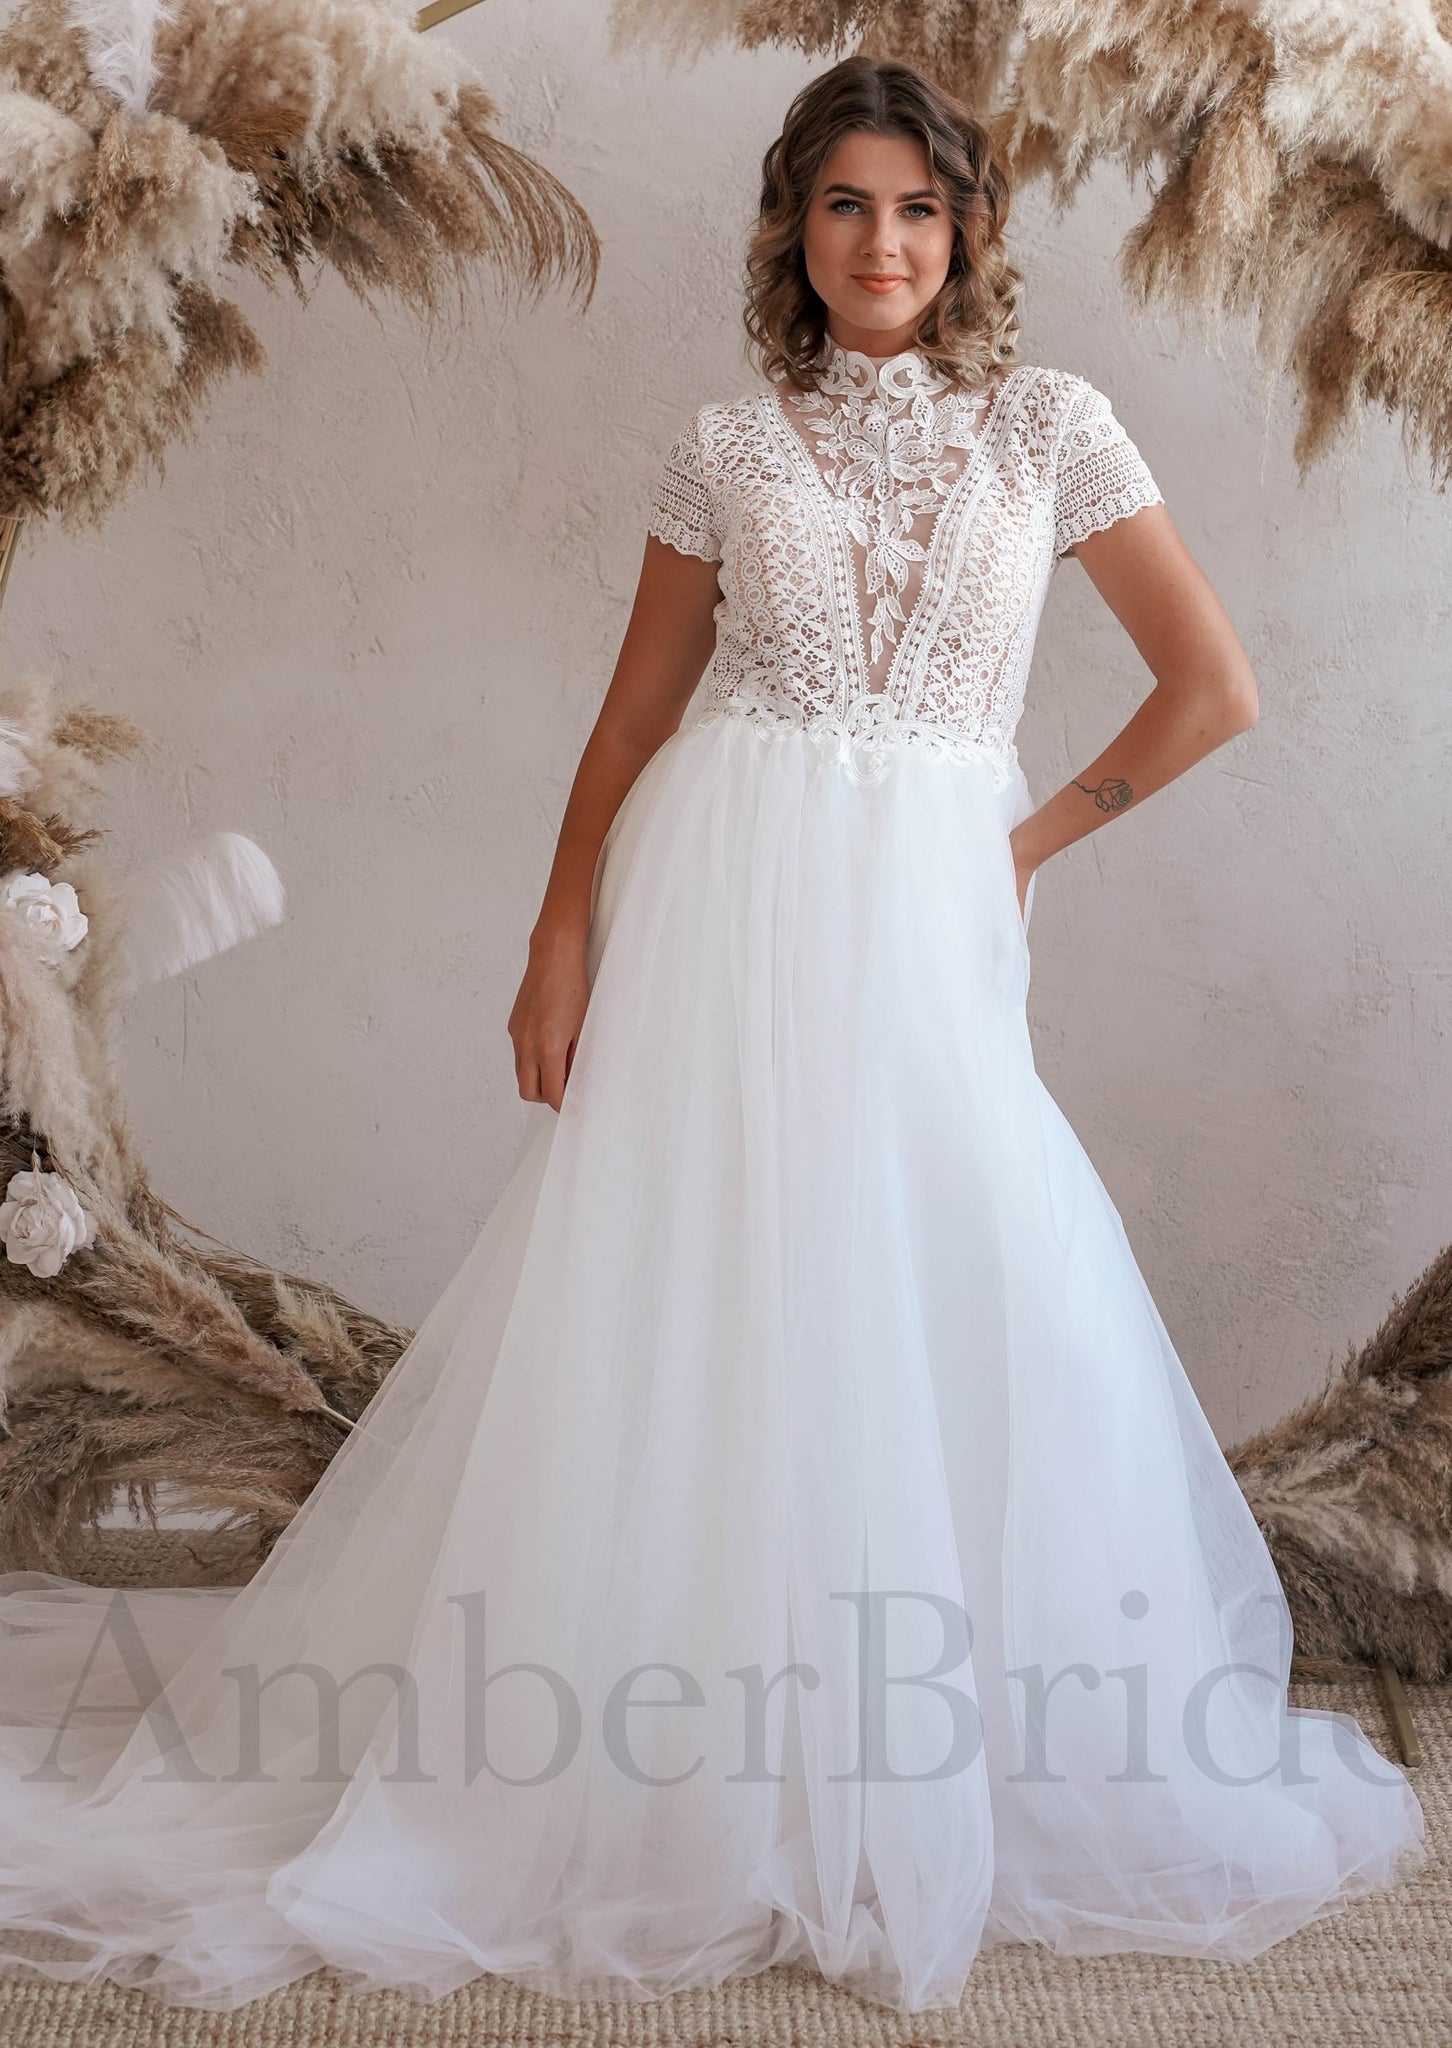 Lace Halter Boho Ivory Wedding Dress with Tulle Skirt